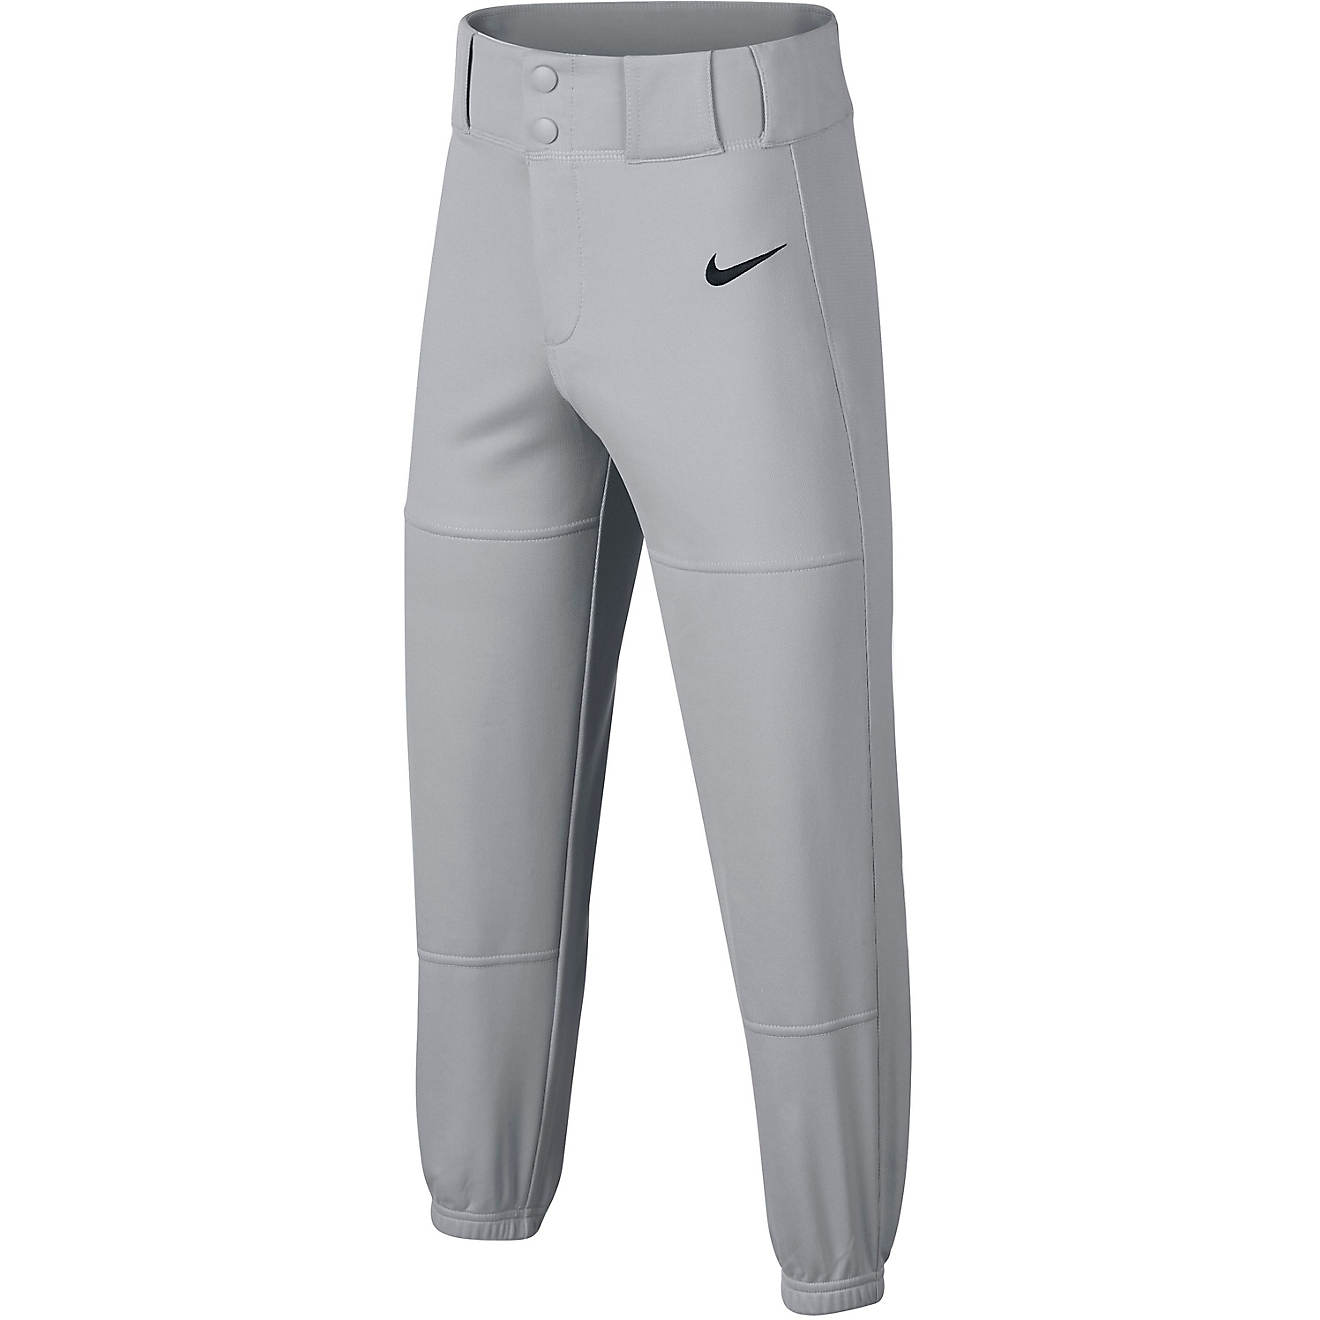 Nike Boys' Core Elastic Baseball Pants | Free Shipping at Academy